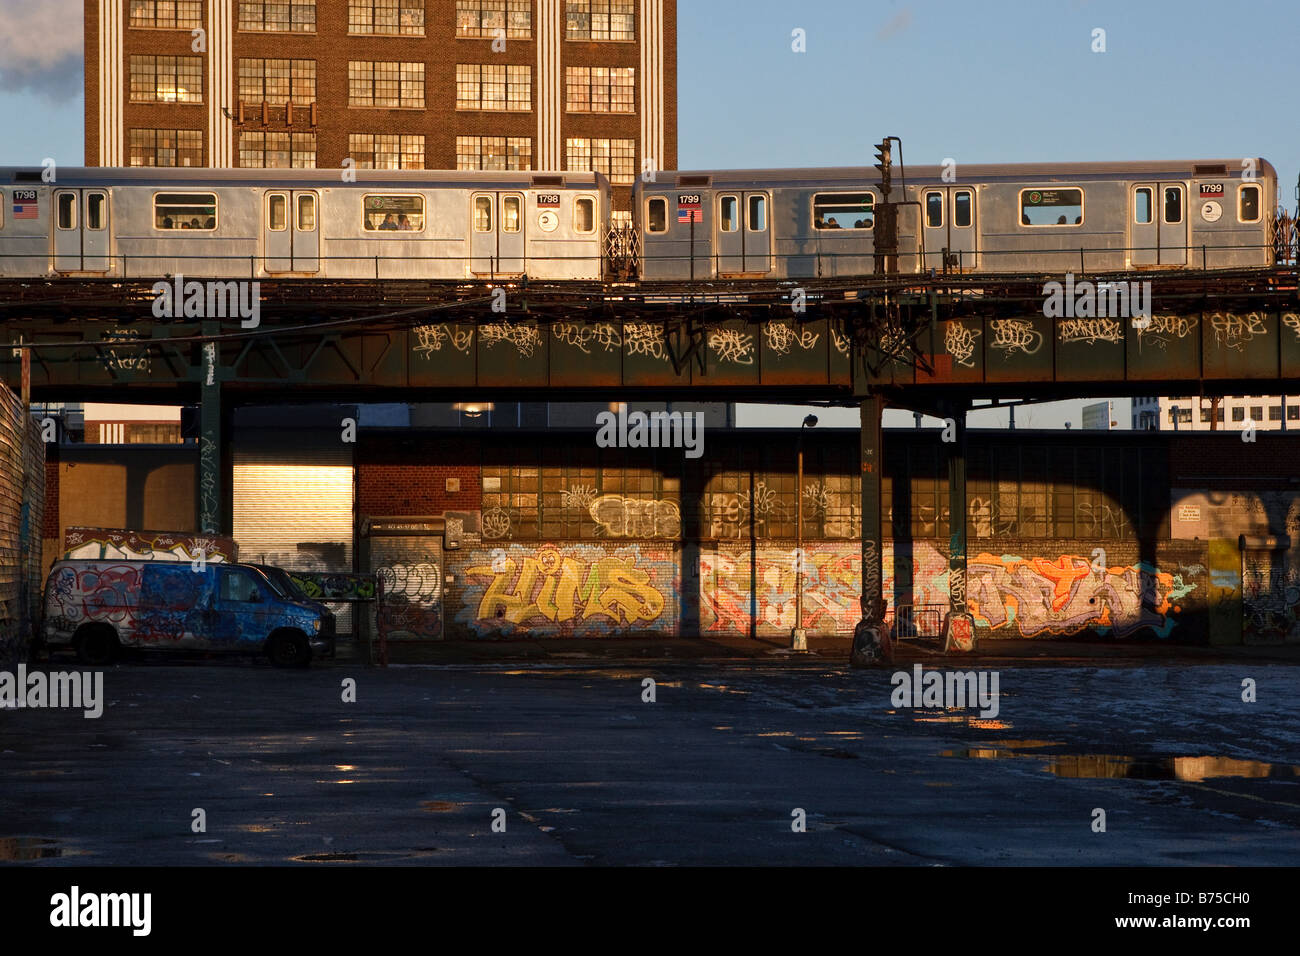 Elevated train travels through ghetto. Stock Photo